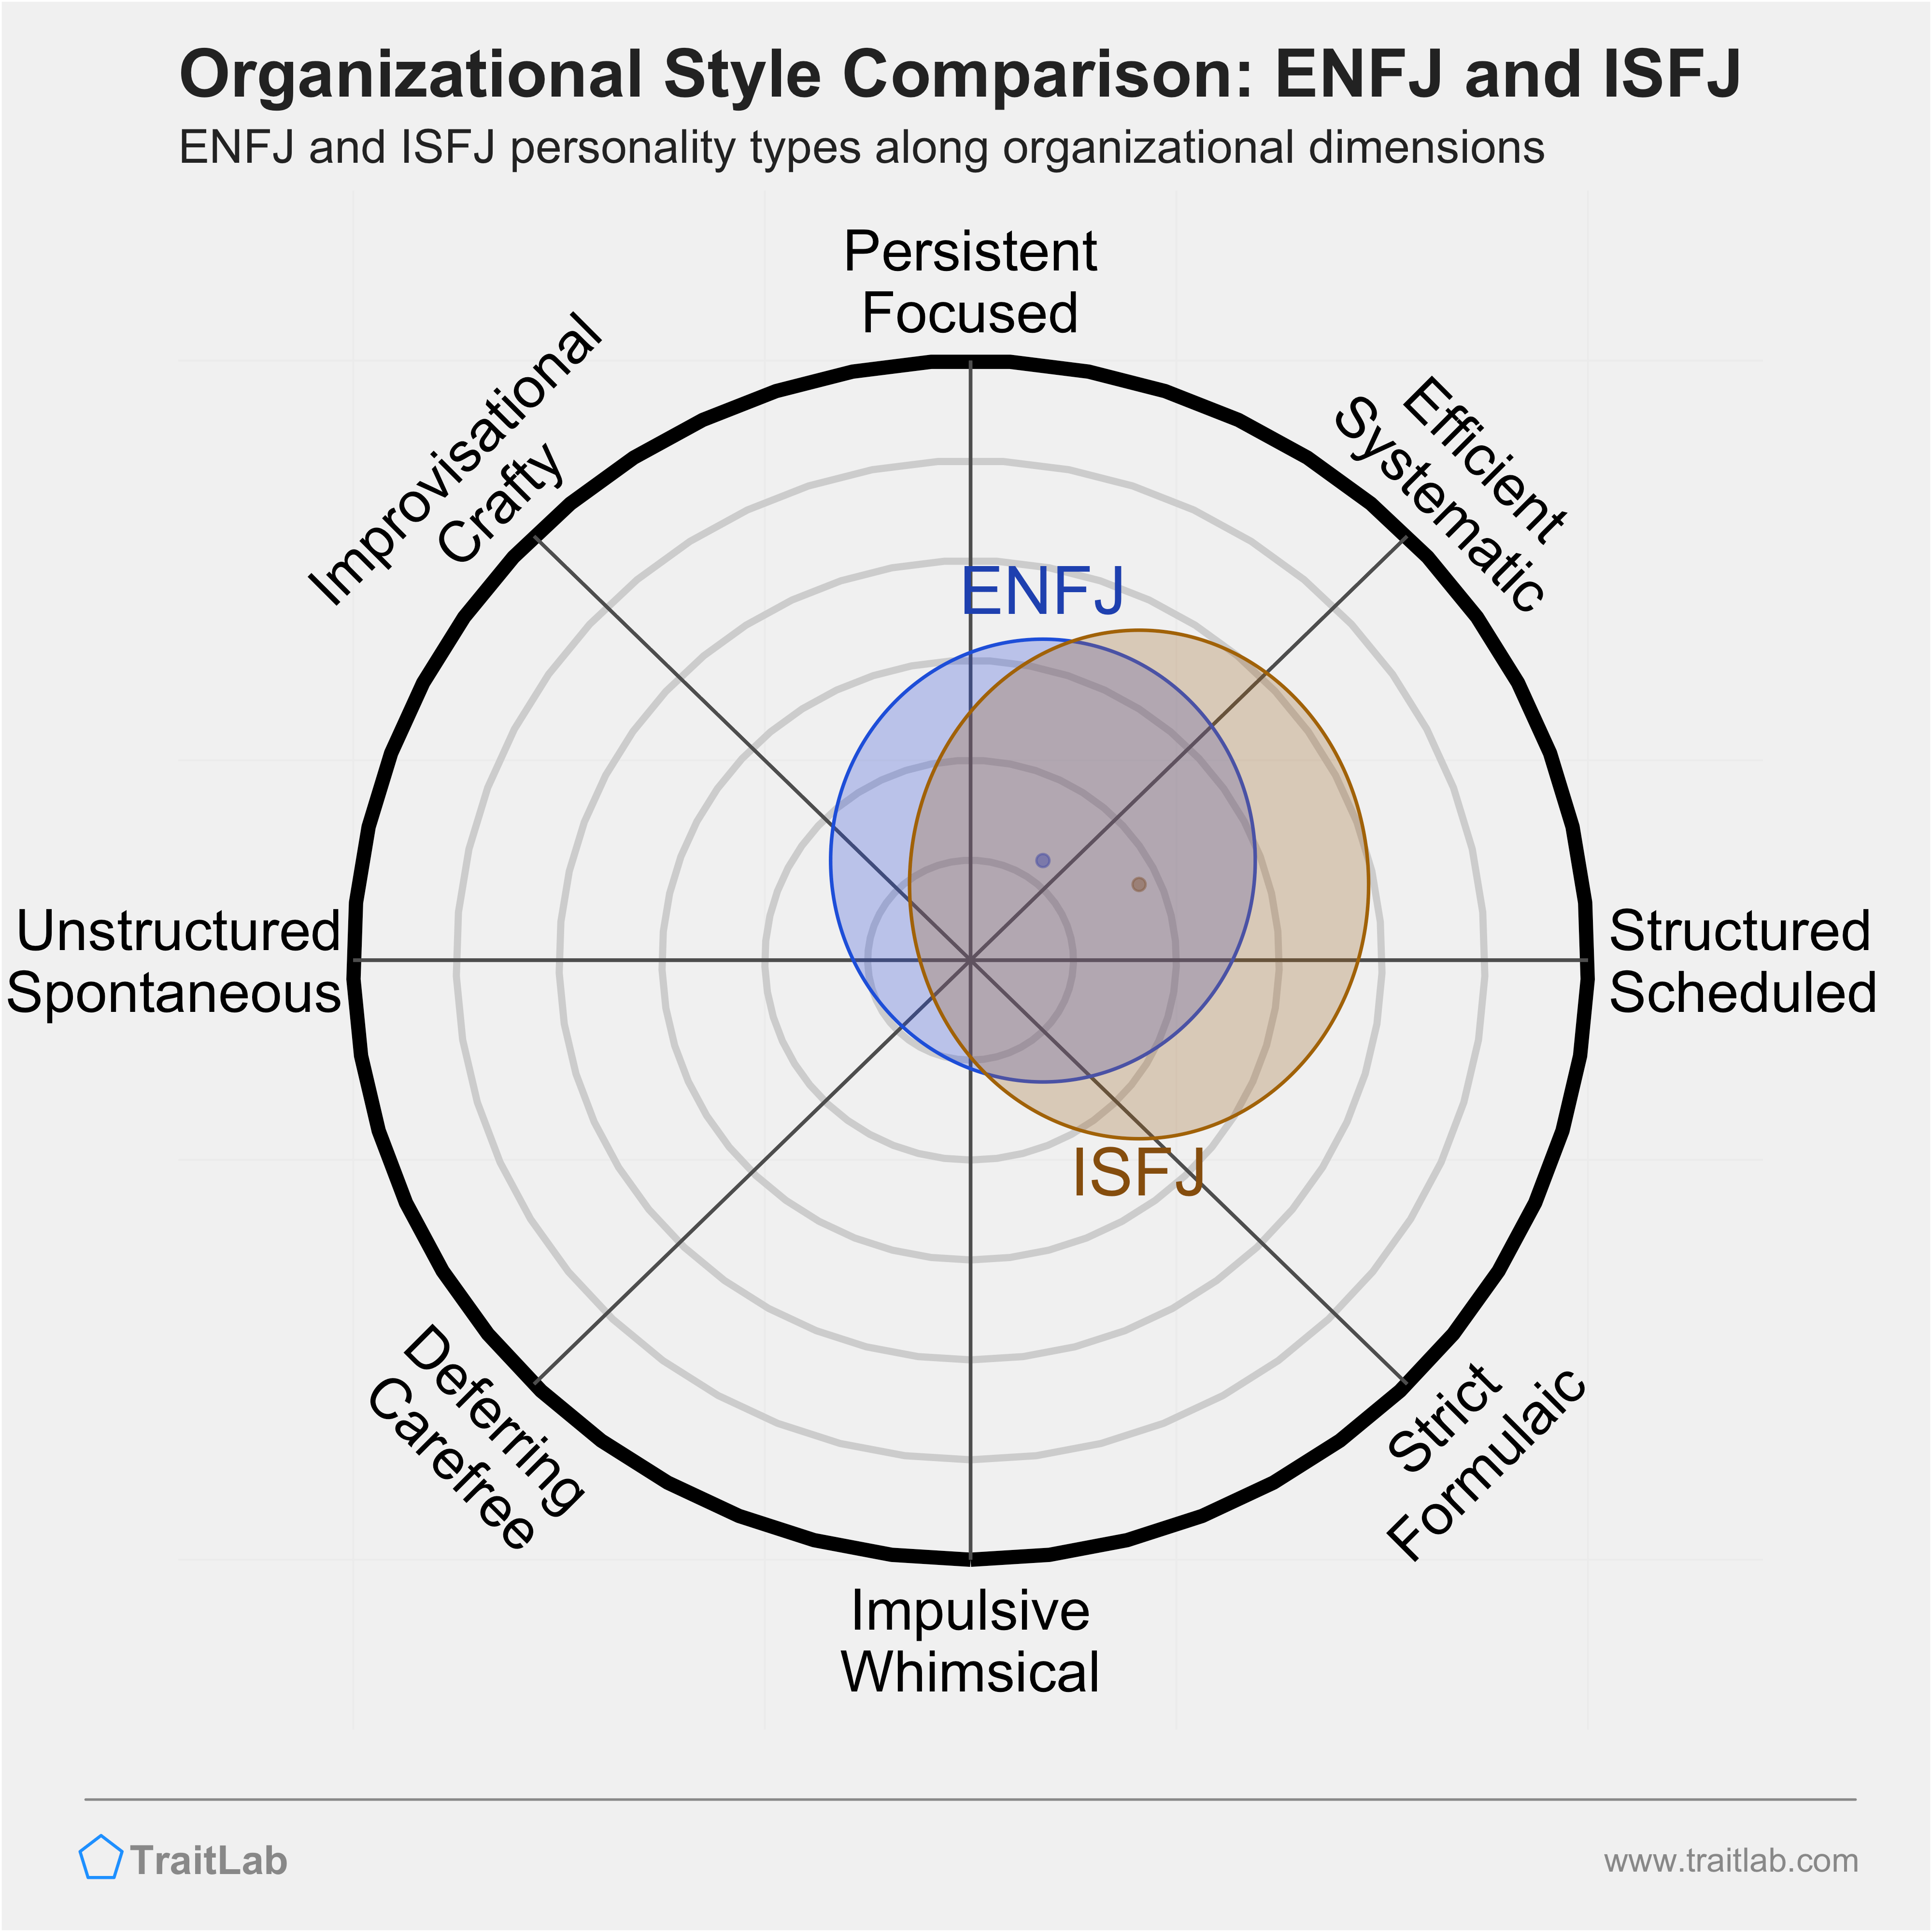 ENFJ and ISFJ comparison across organizational dimensions